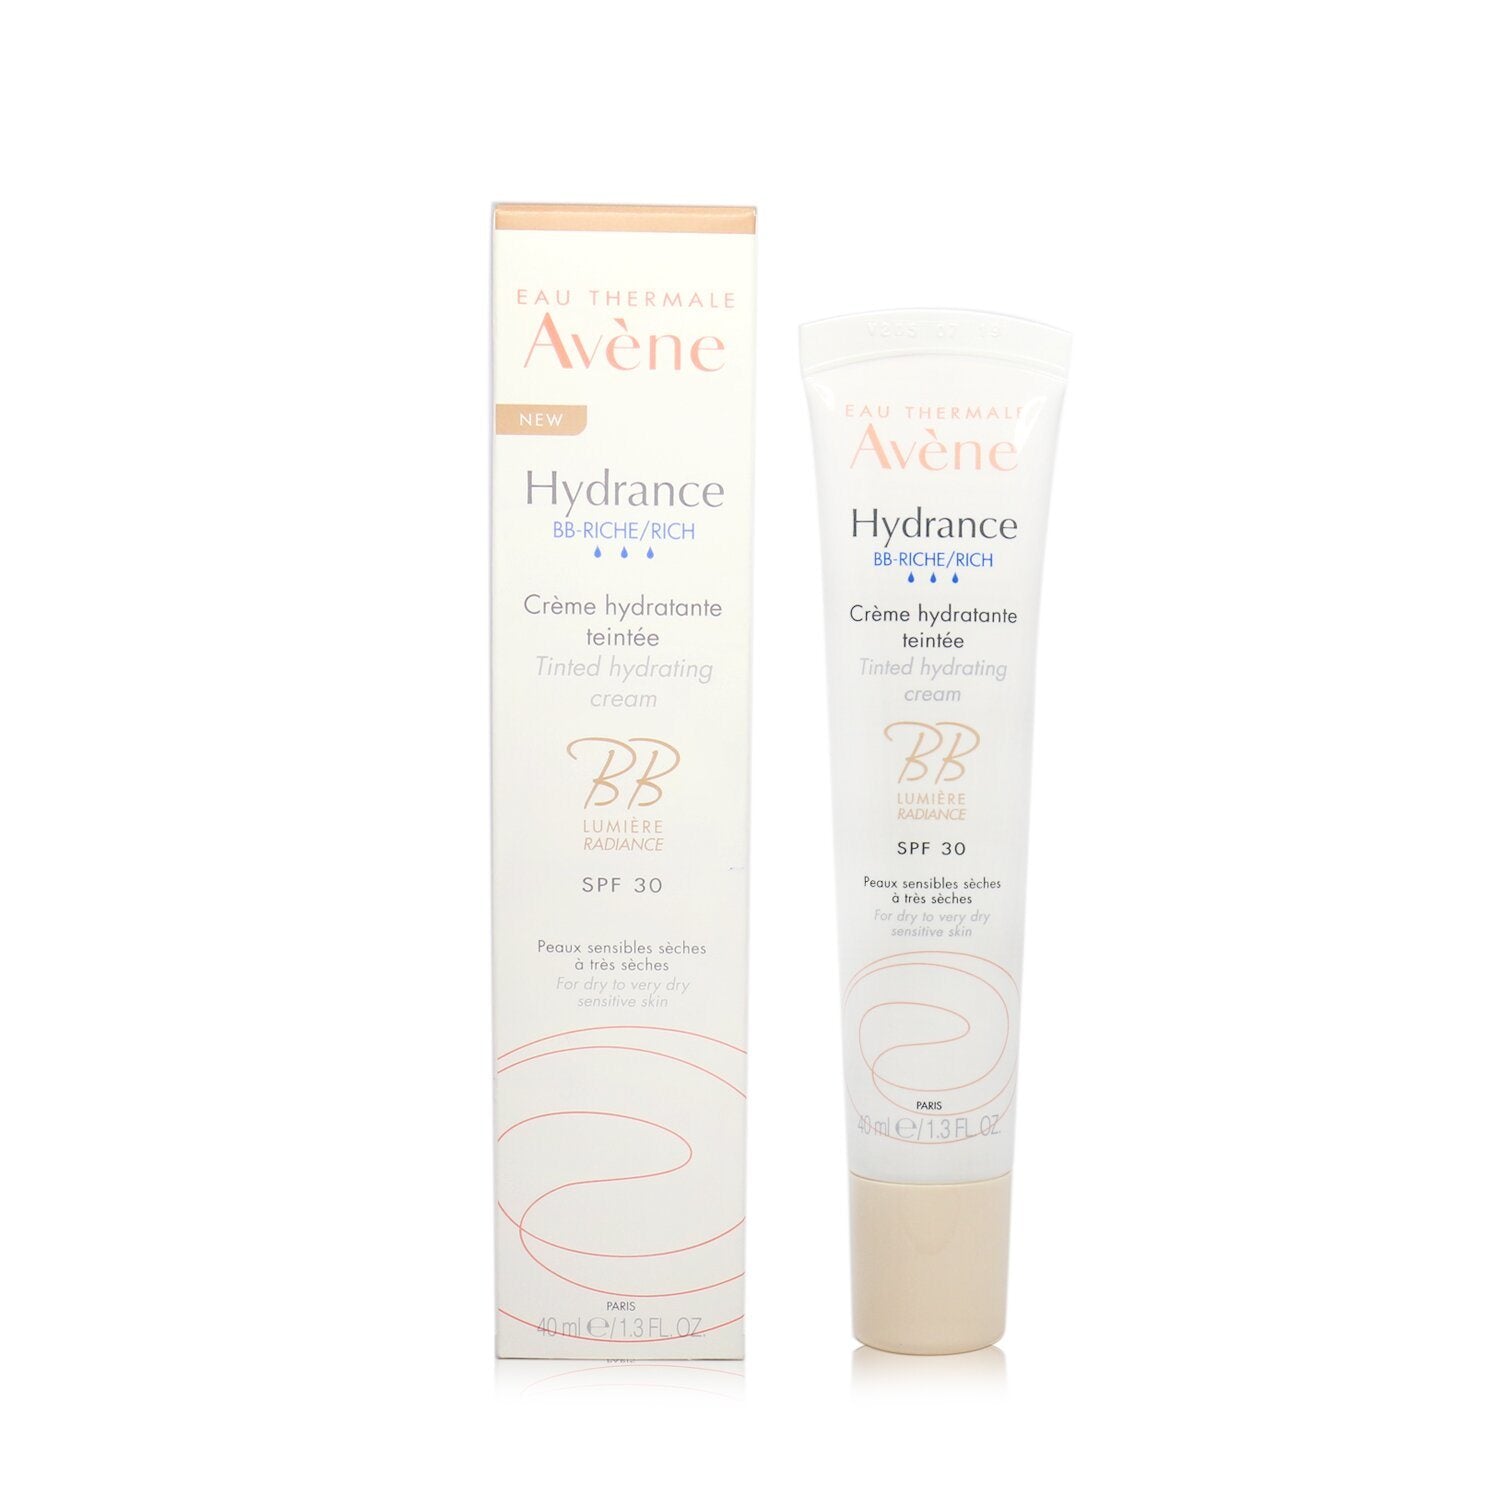 AVENE - Hydrance BB-RICH Tinted Hydrating Cream SPF 30 - For Dry to Very Dry Sensitive Skin 20876 40ml/1.3oz - moisturizing sunscreen for sensitive skin.